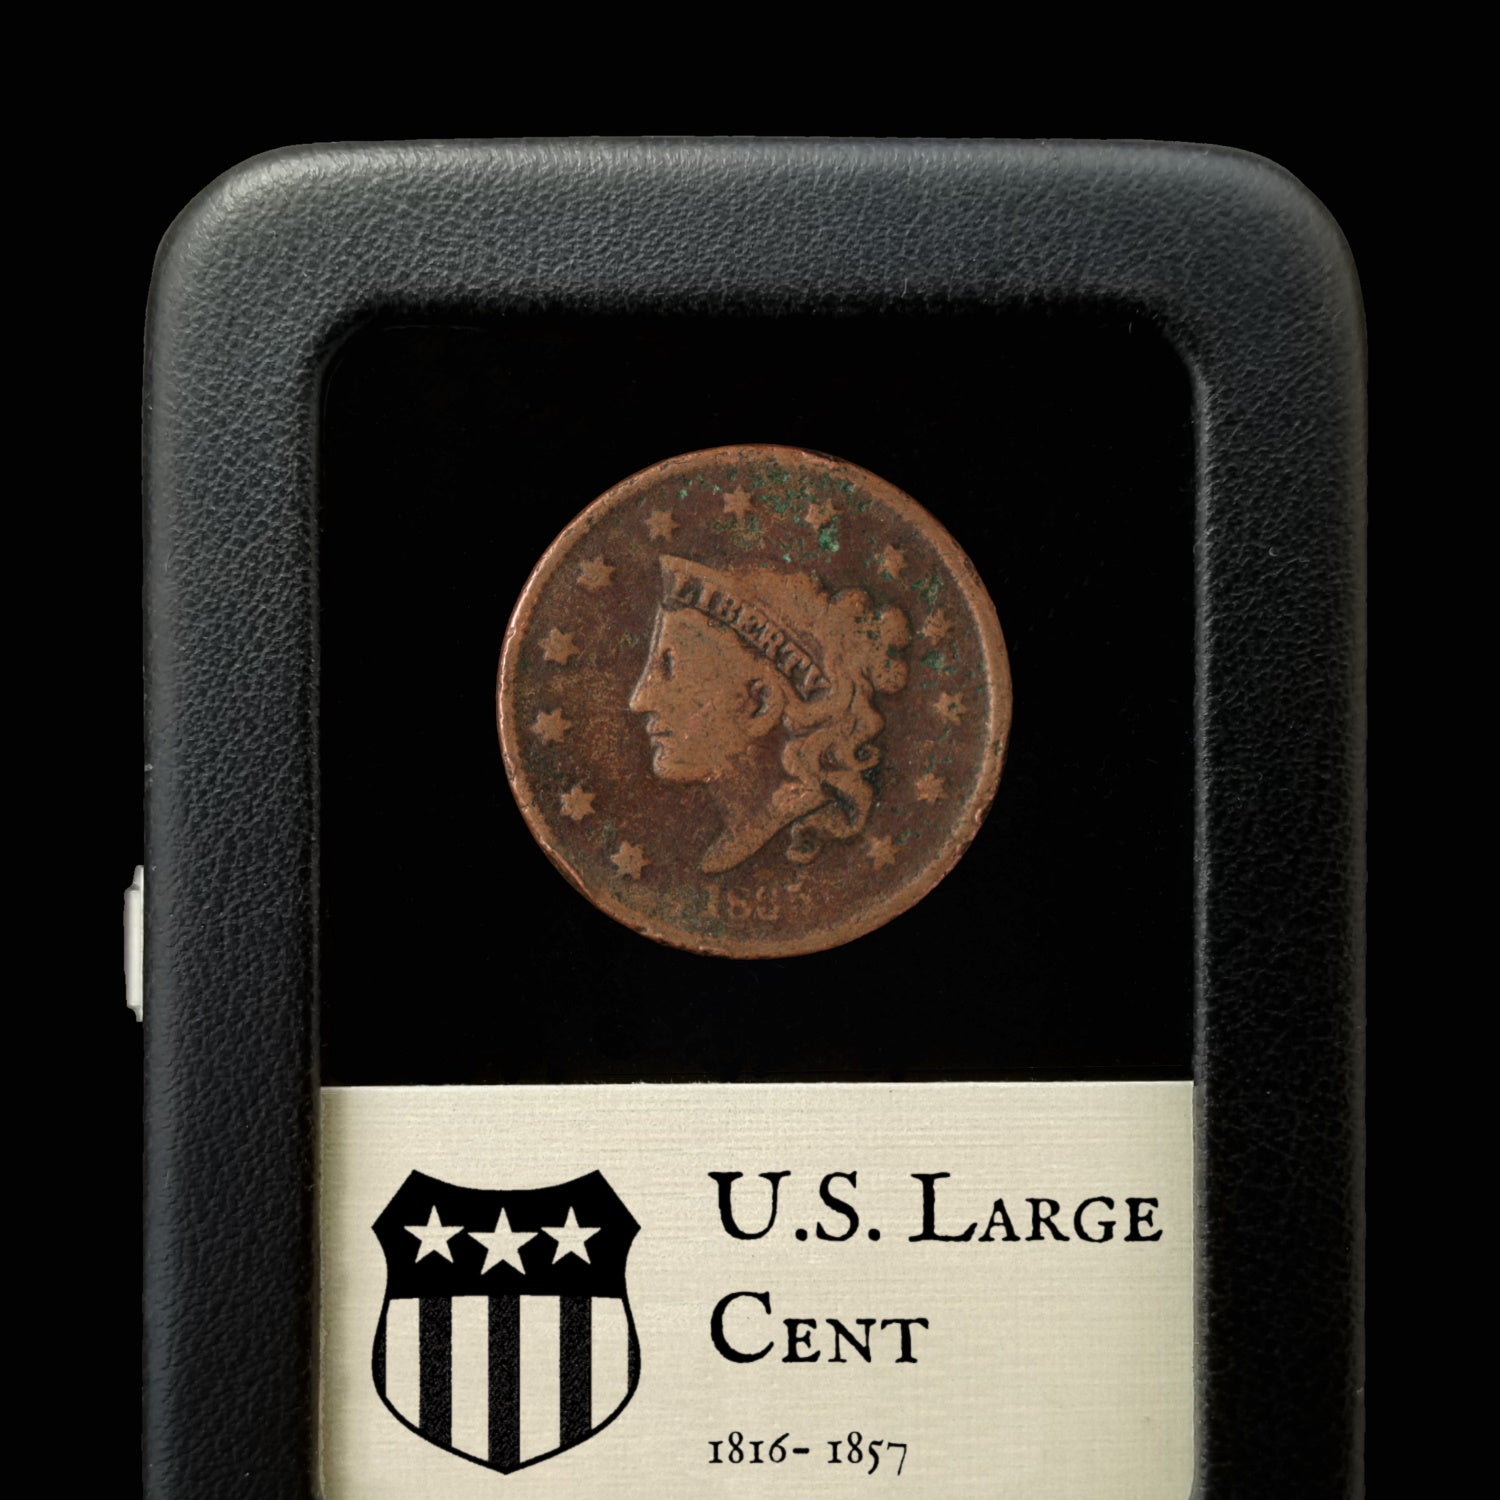 U.S. Large Cent (Coronet or Braided Type) - 1816 to 1857 - United States